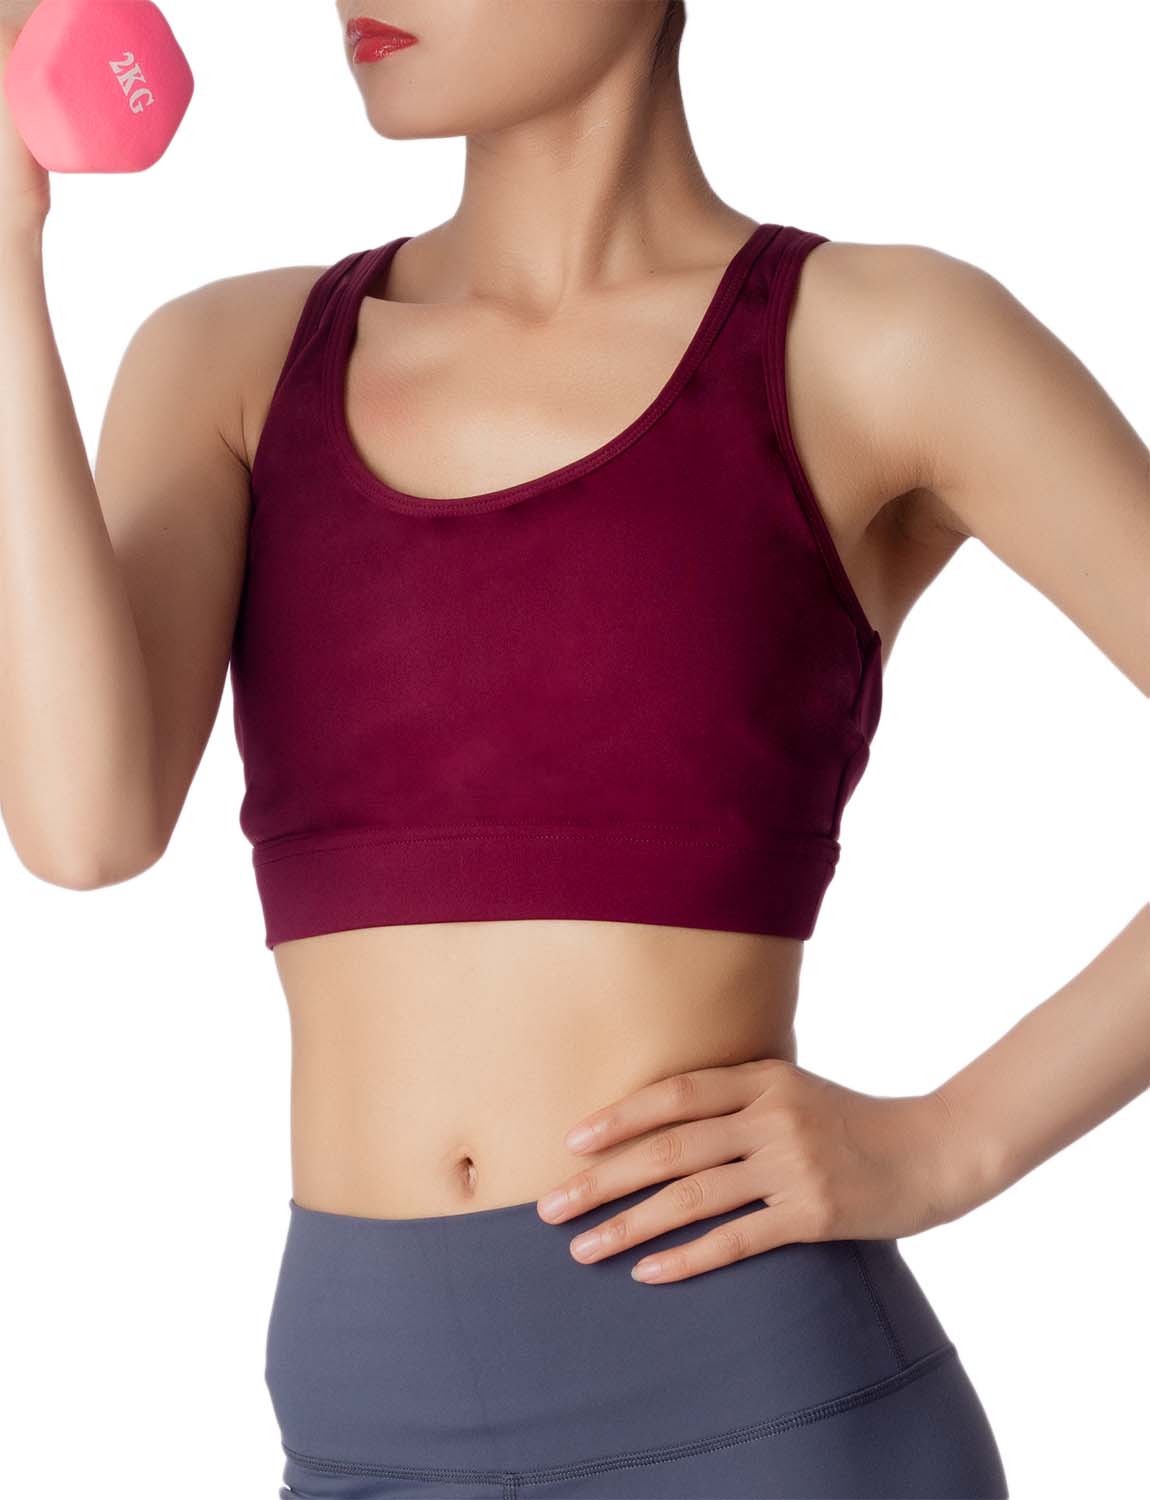 Women's Strappy Crop Top Yoga Fitness Gym Sheer Straps Wireless Sports Bra